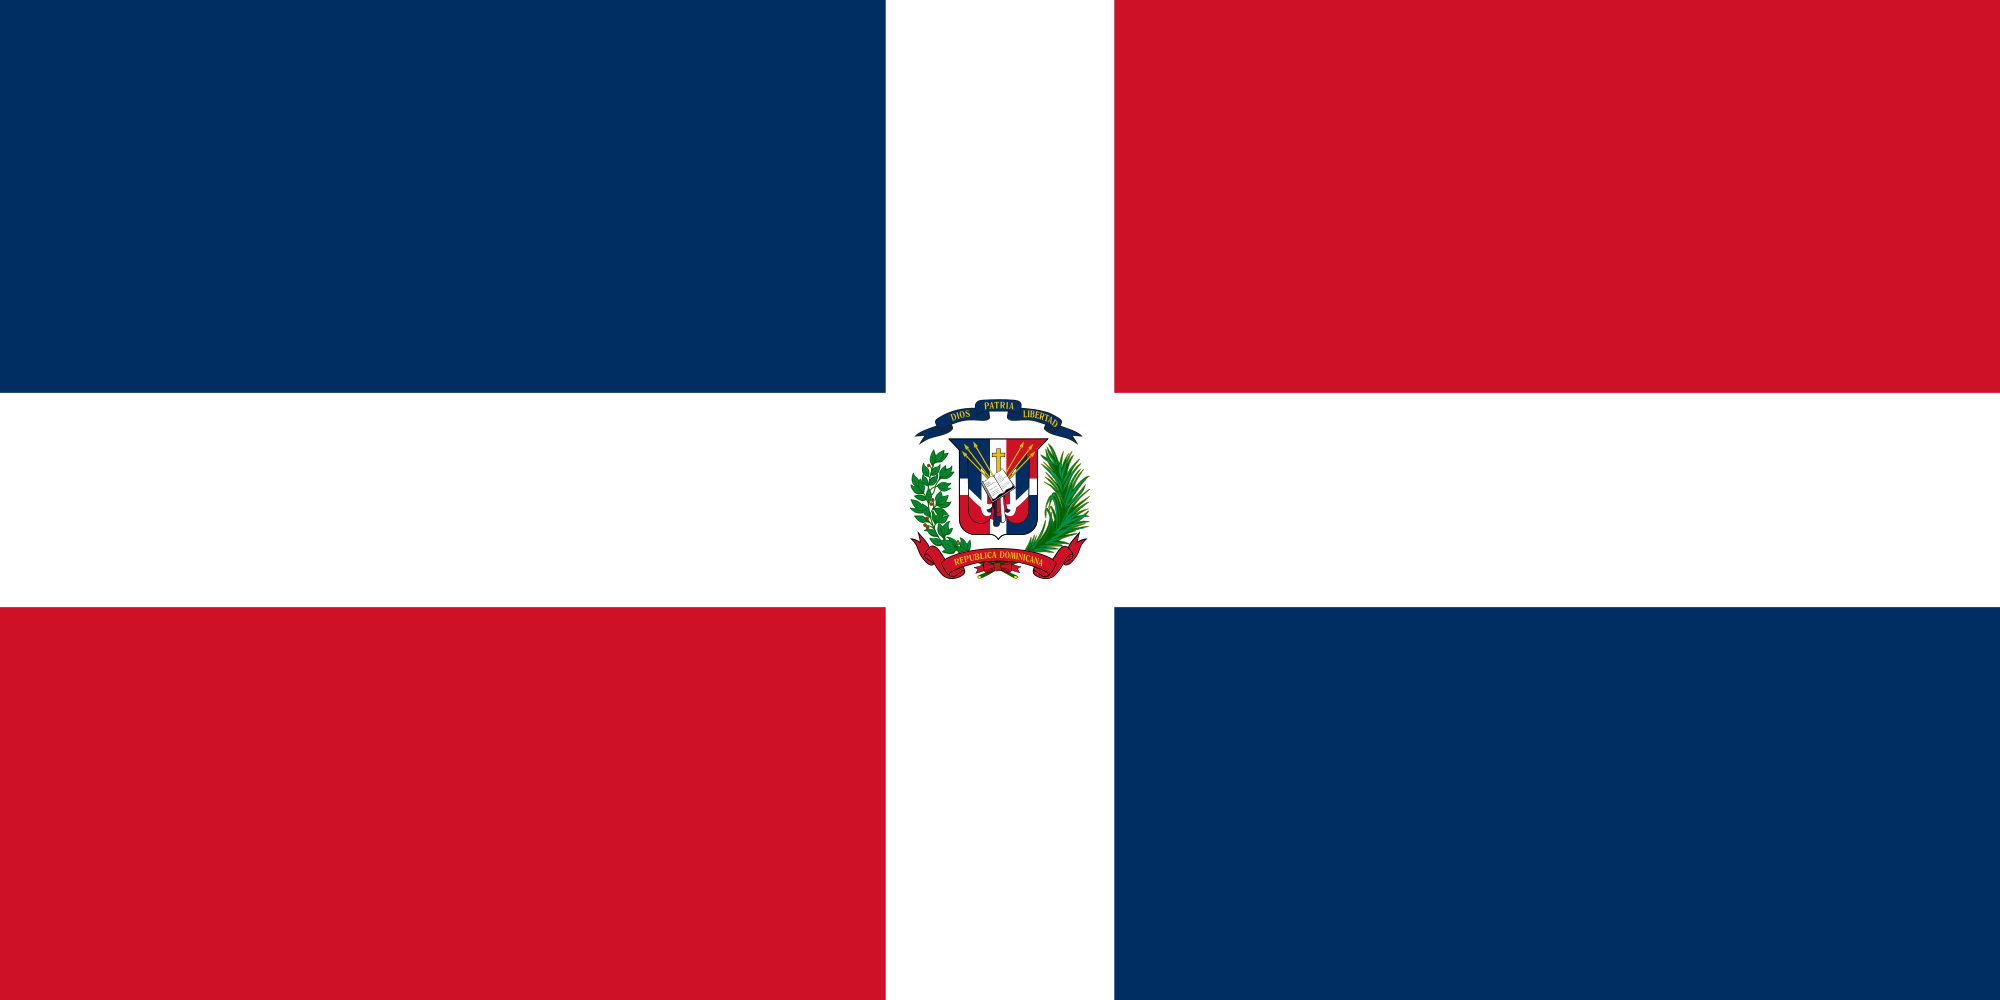 Dominican Republic (Naval ensign)